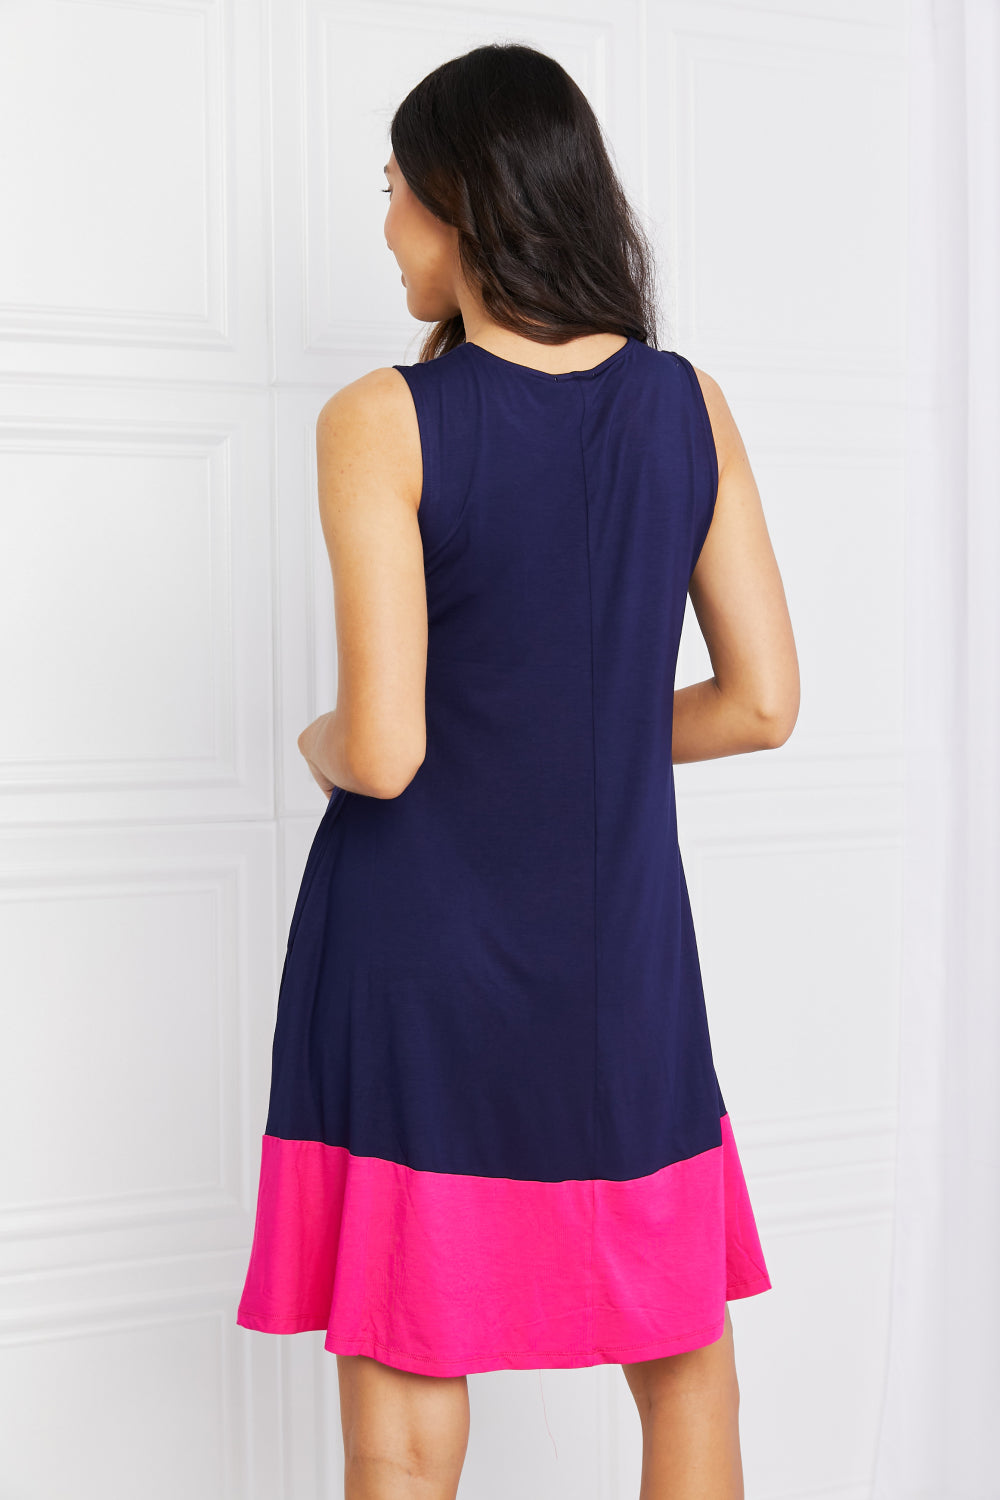 Yelete Full Size Two-Tone Sleeveless Mini Dress with Pockets | Dresses - CHANELIA